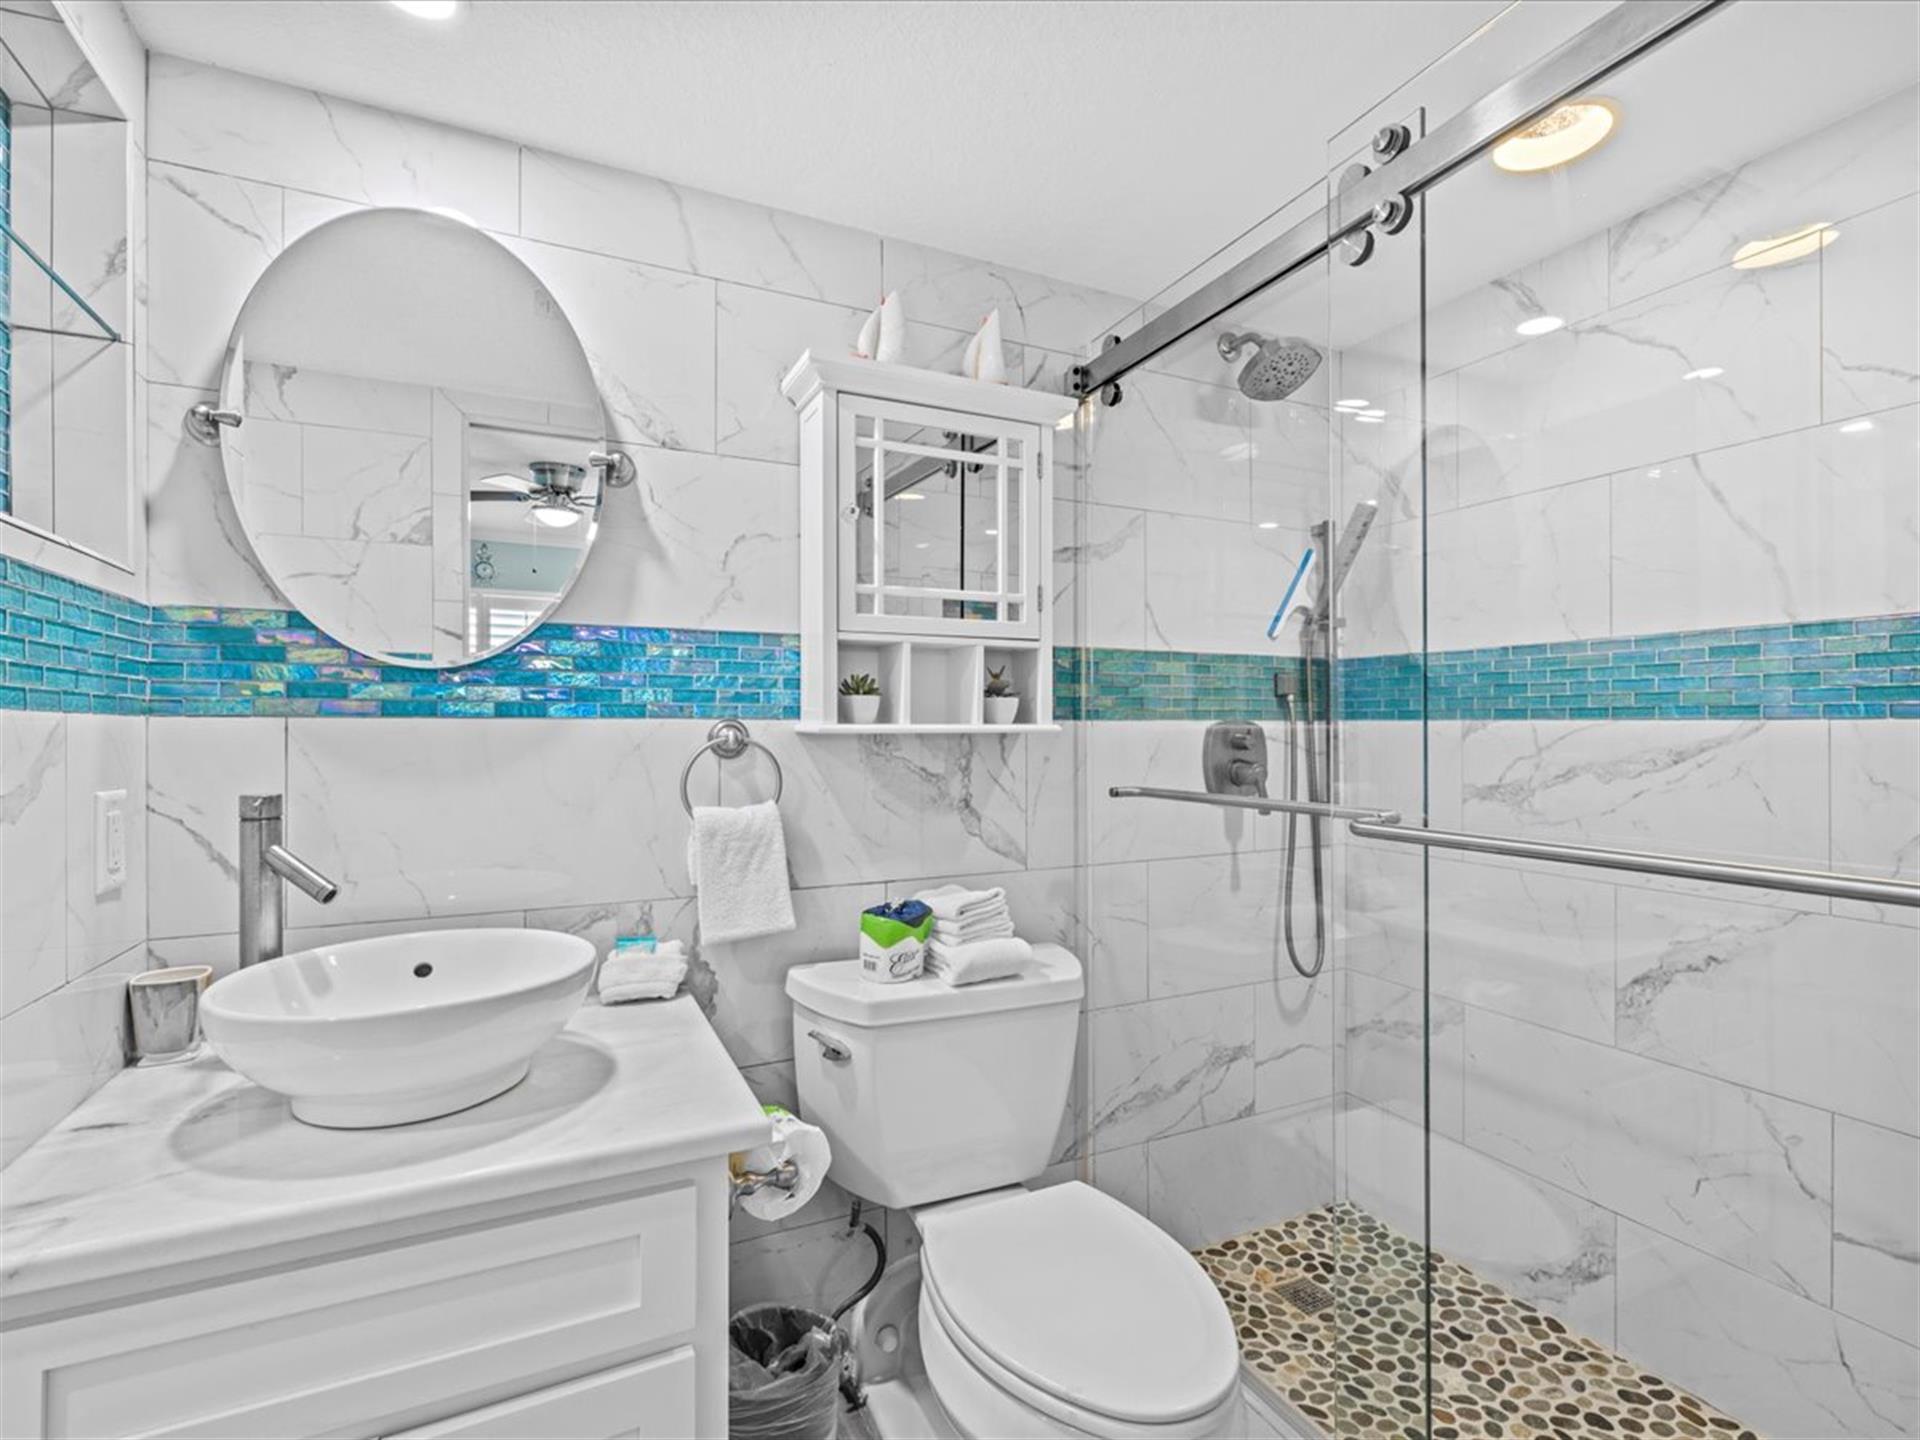 HSRC 722 Bathroom With WalkIn Shower